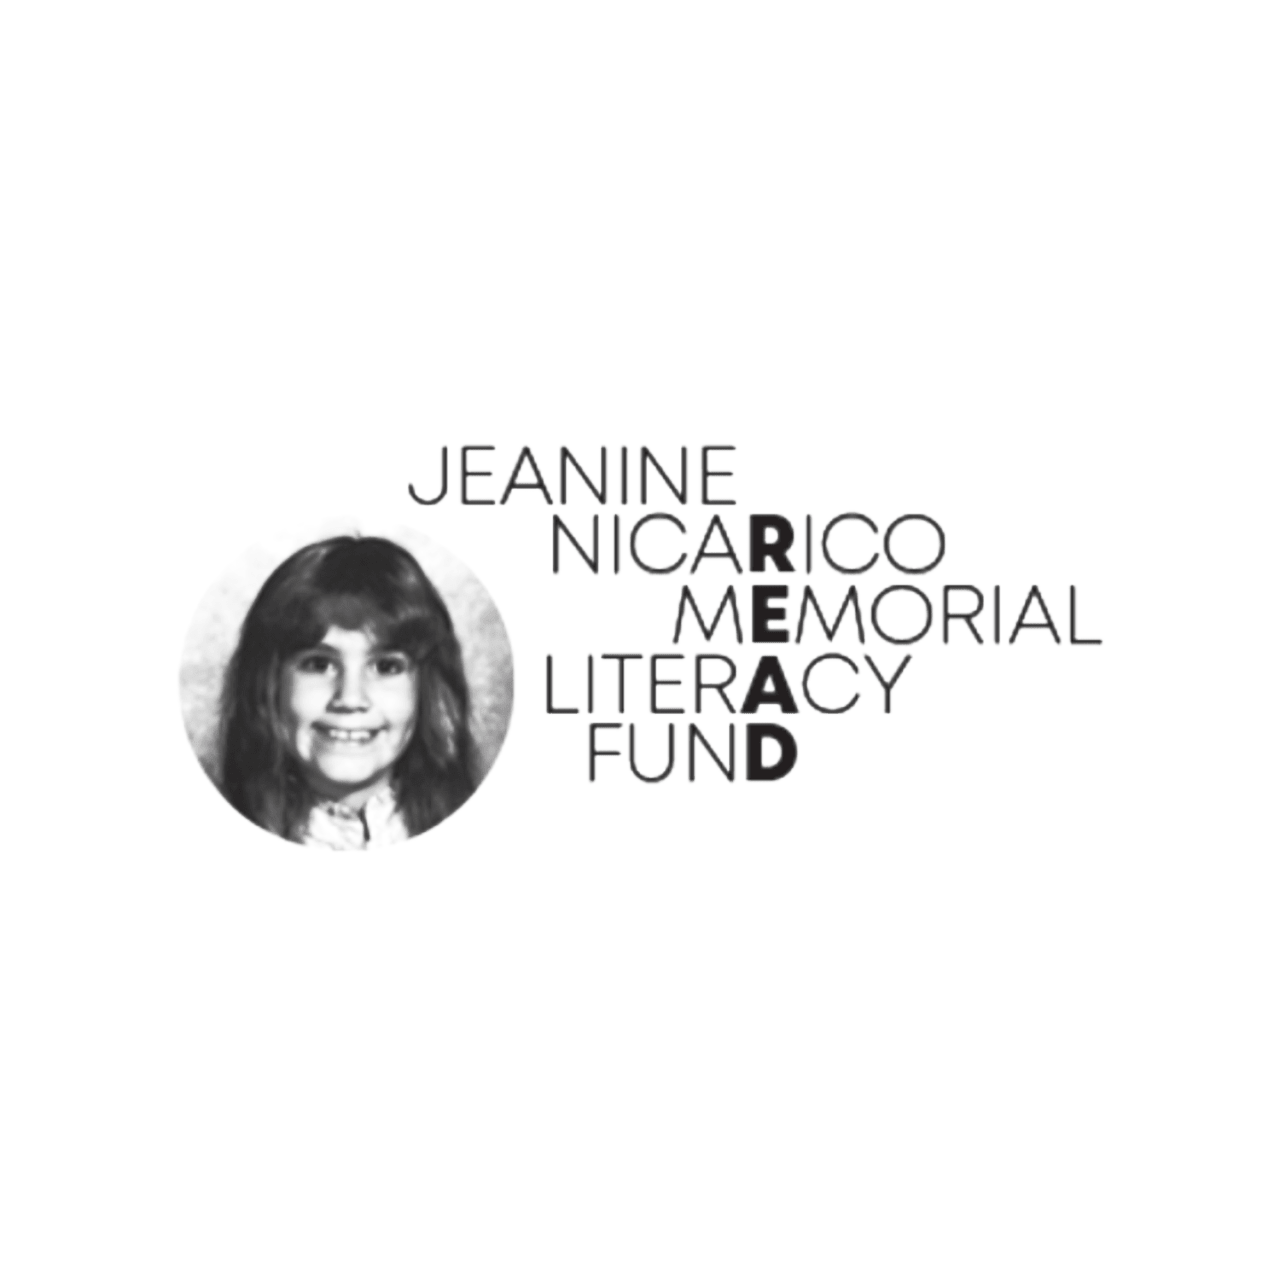 The Jeanine Nicarico Memorial Literacy Fund